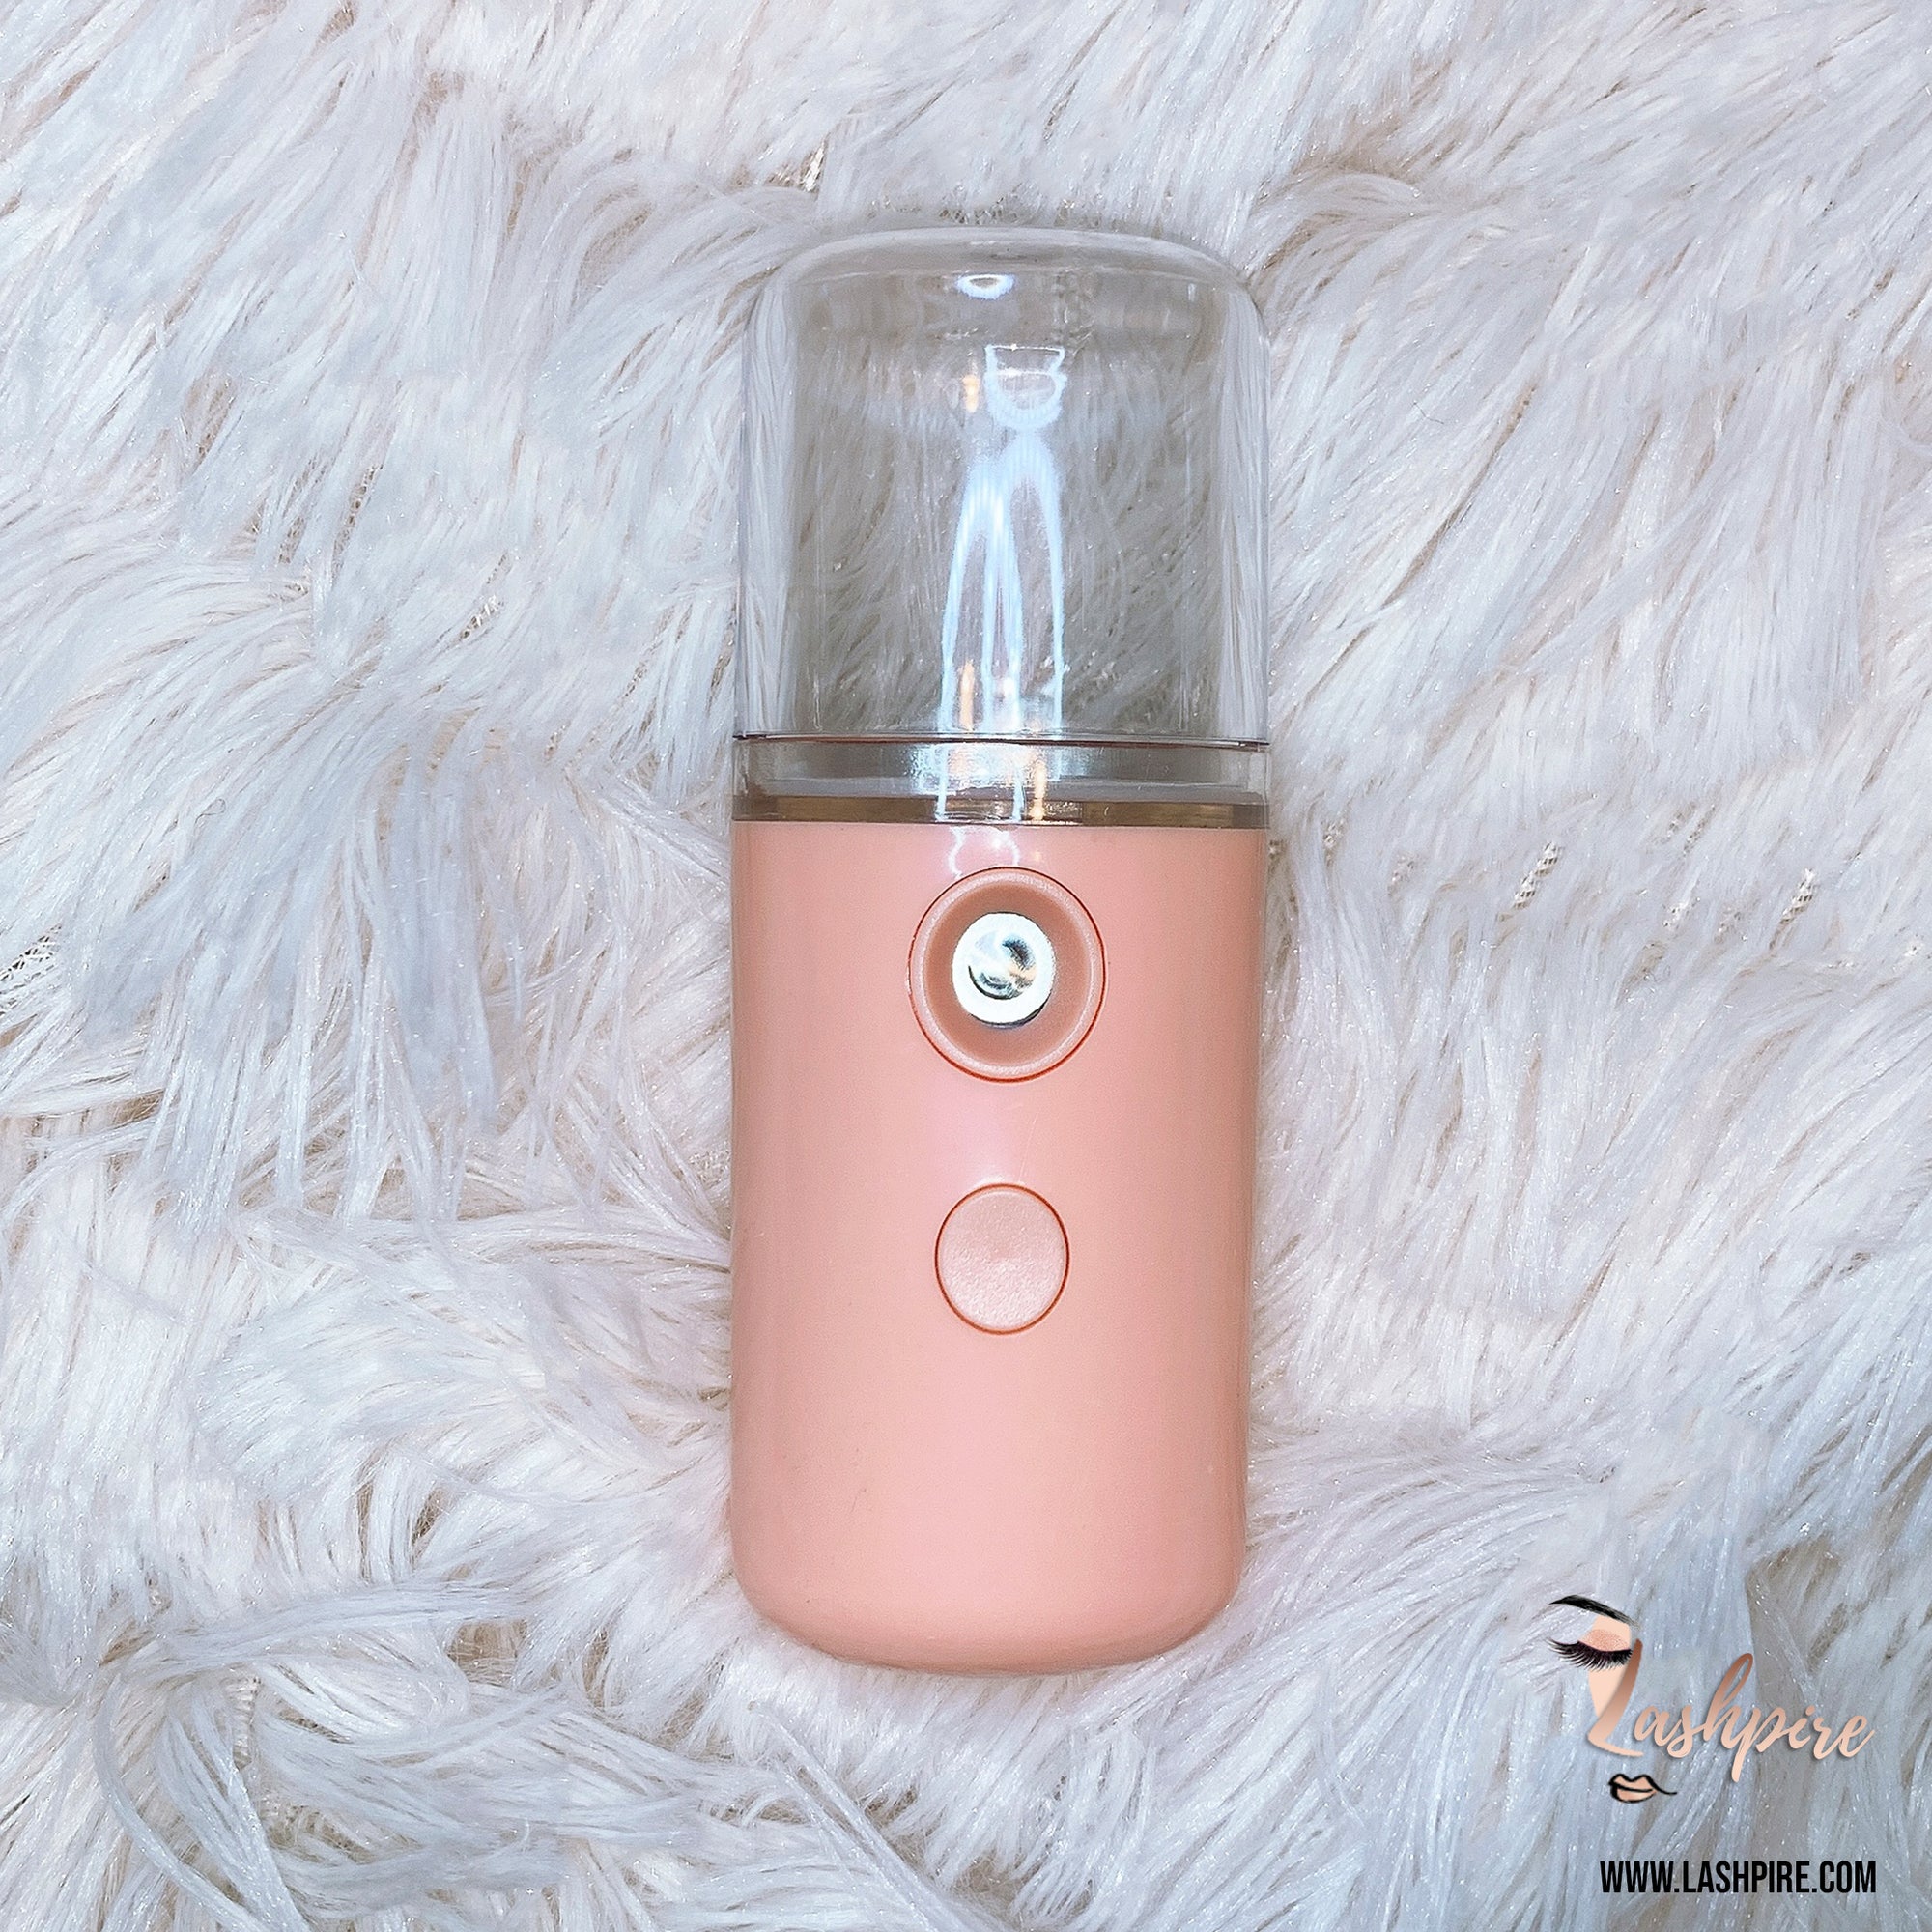 Electronic Nanomister Atomizer Humidifier Handy Facial Sprayer - Pink - Lashpire